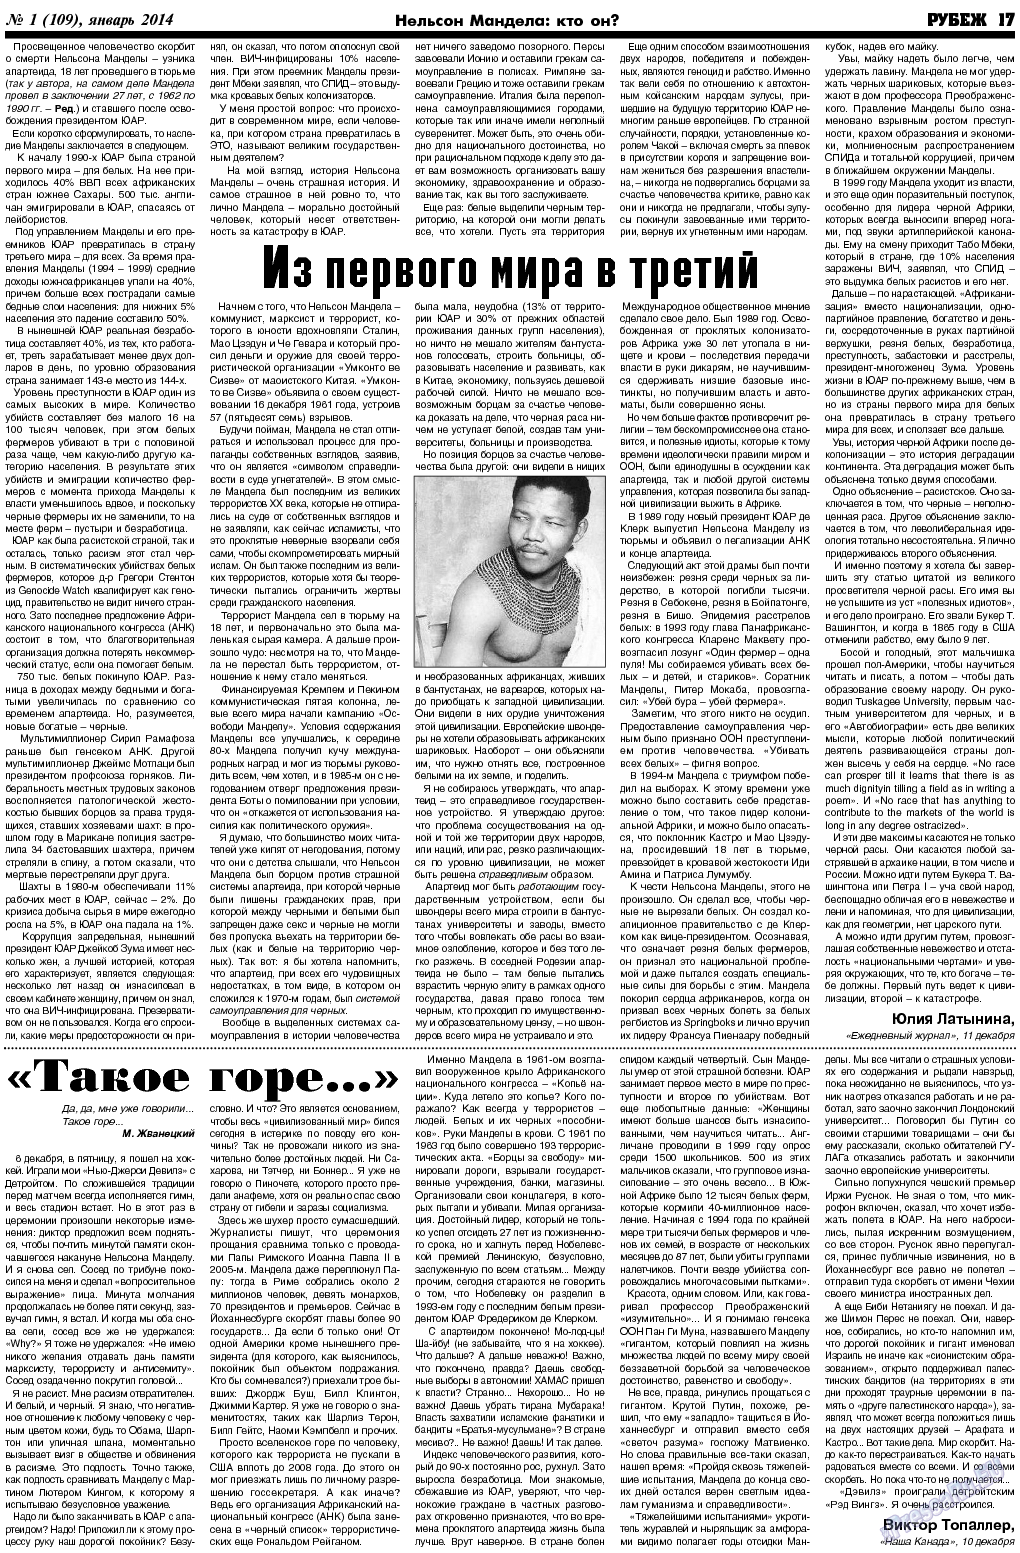 Рубеж, газета. 2014 №1 стр.17